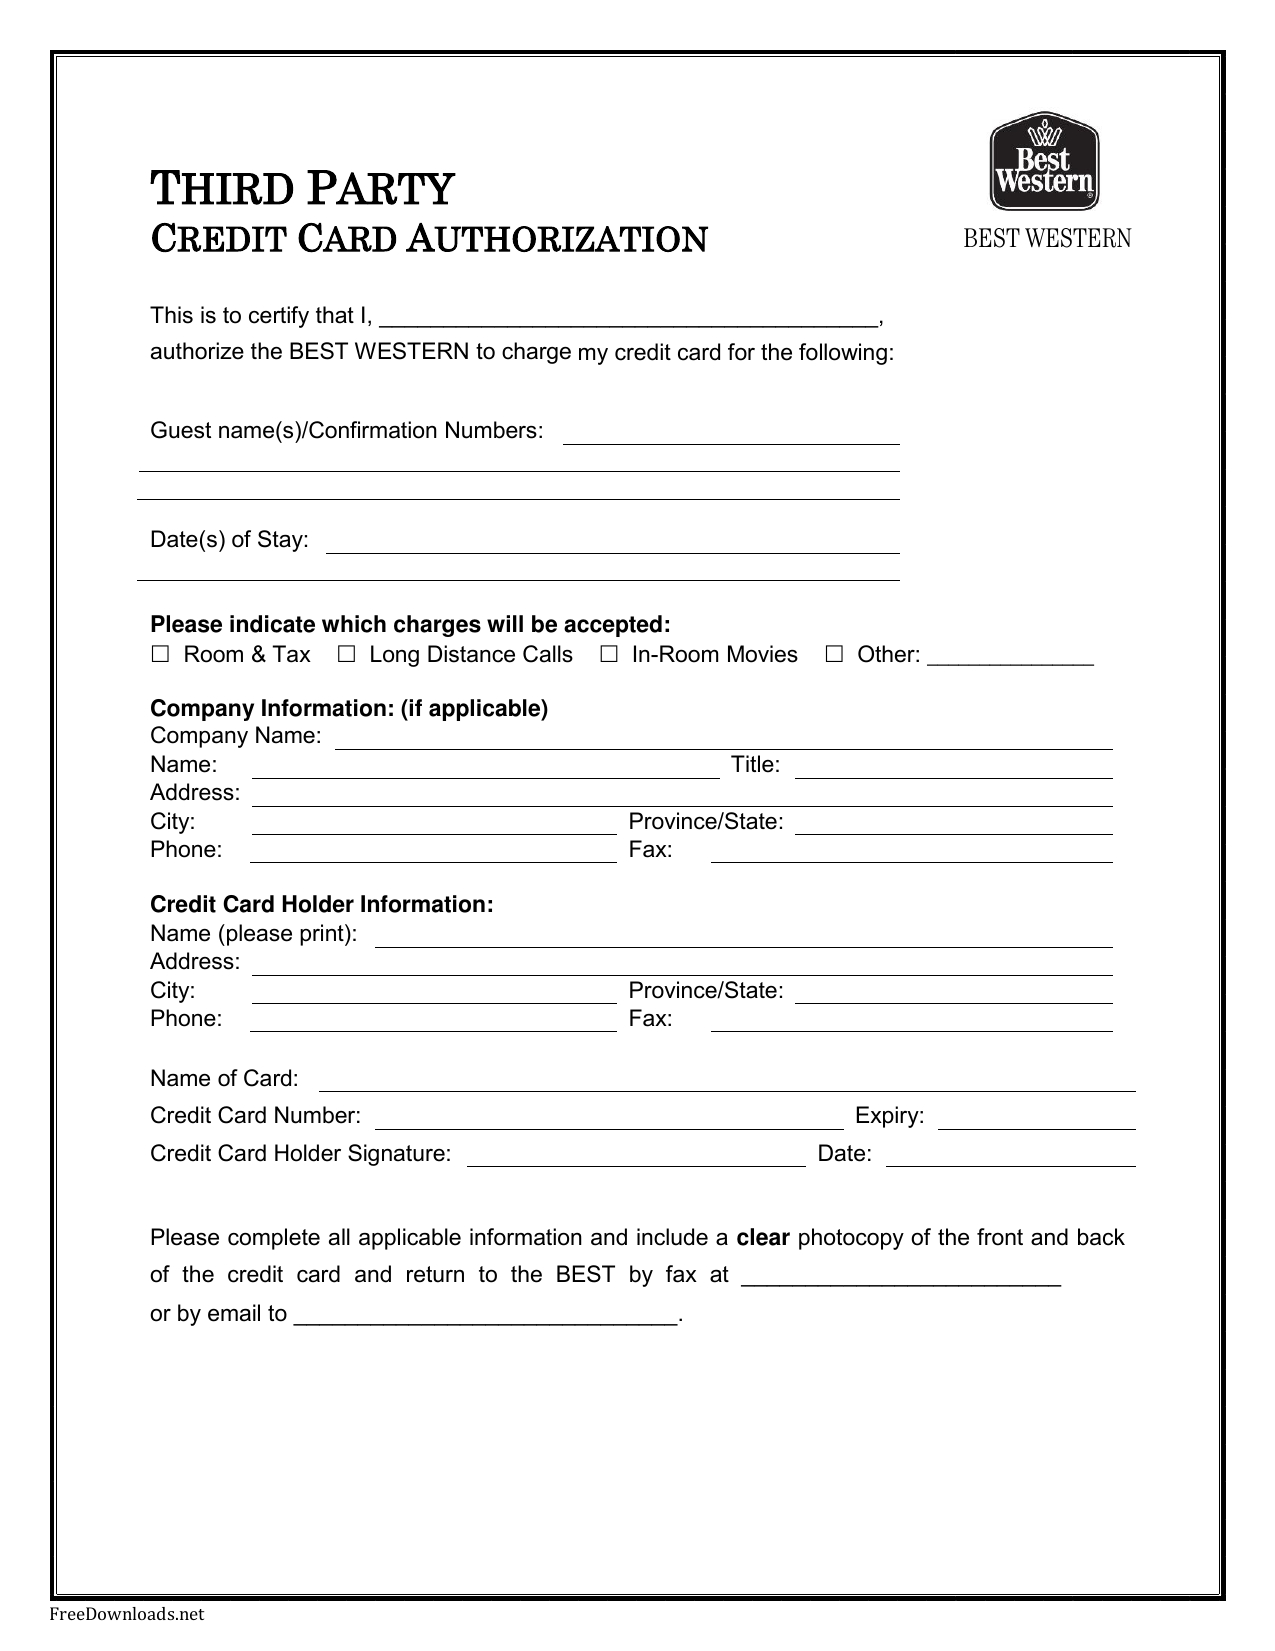 Authorization Form Templates - Dalep.midnightpig.co Throughout Credit Card Authorization Form Template Word